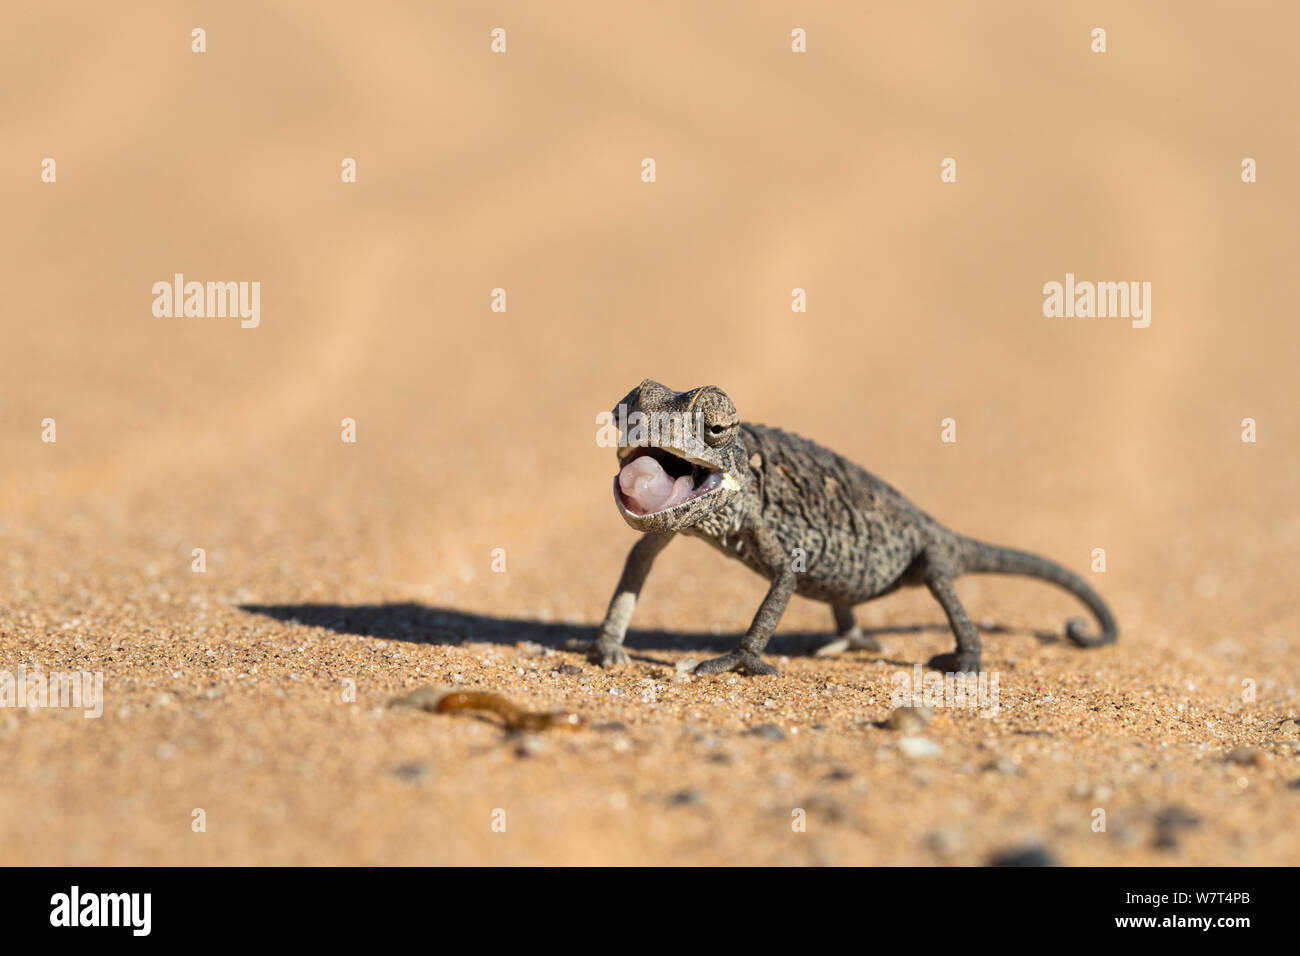 Namaqua chameleon (Chamaeleo namaquensis) poised to strike, Namib Desert, Namibia, April Stock Photo